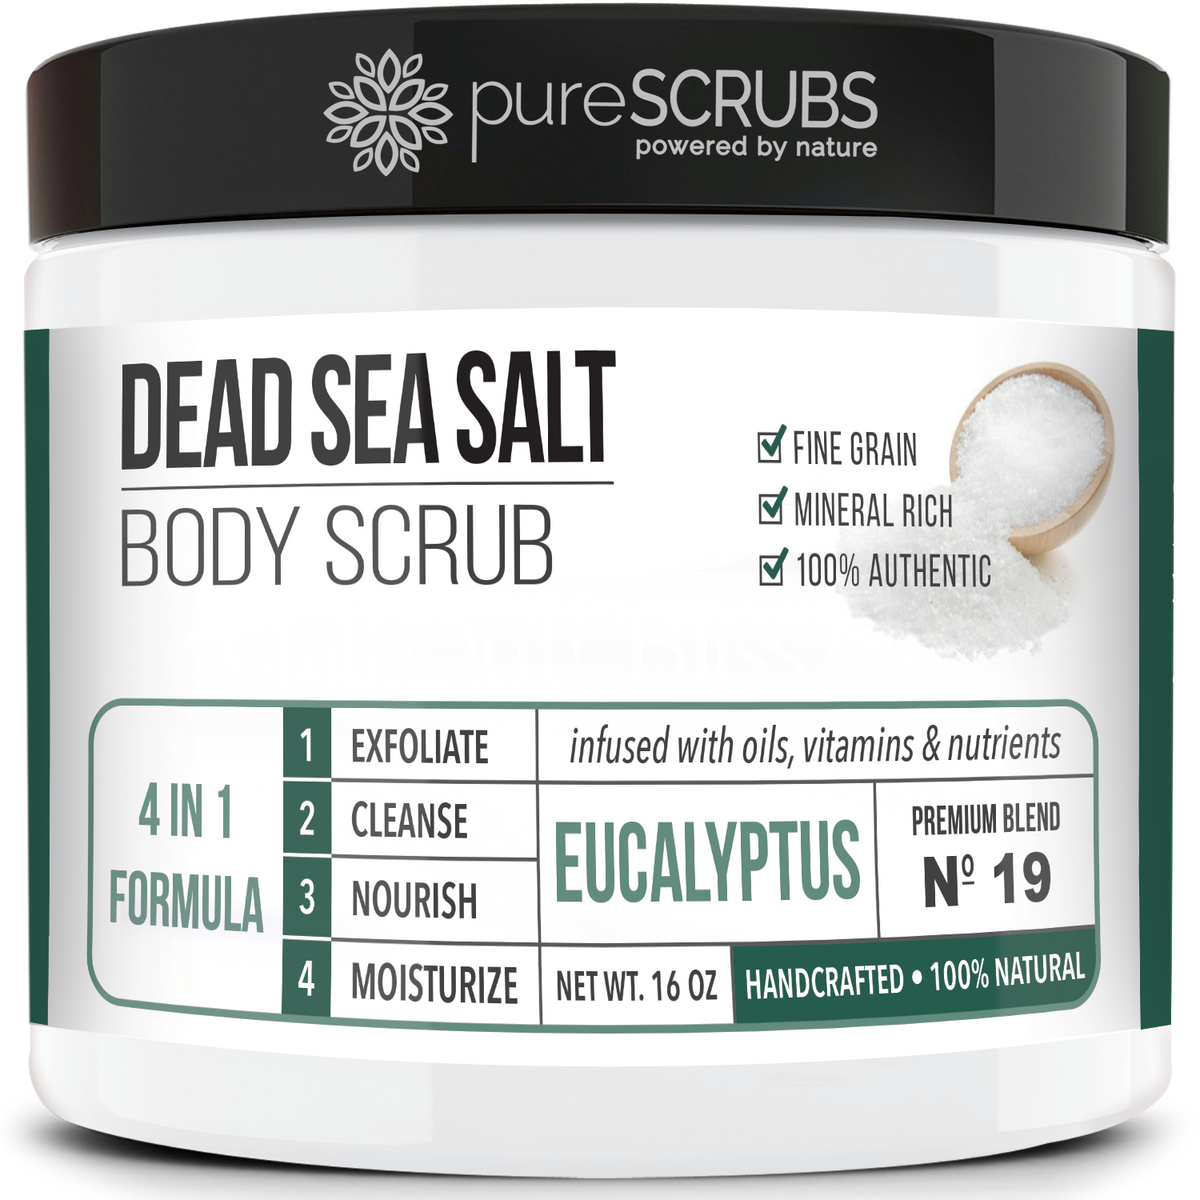 Eucalyptus Body Scrub / Dead Sea Salt / Premium Blend #19